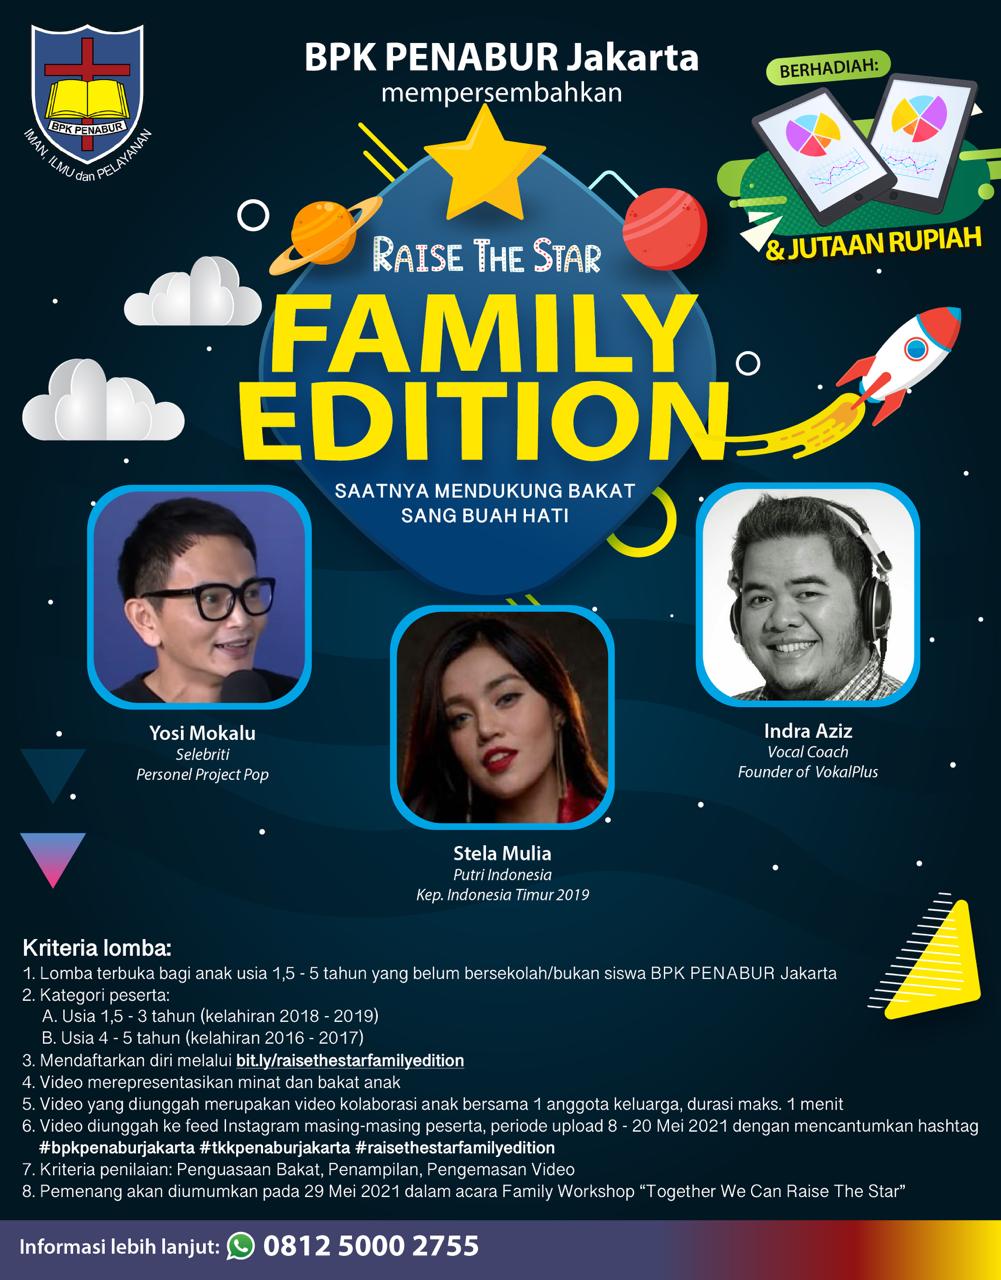 BPK PENABUR Jakarta "Raise The Star : Family Edition"